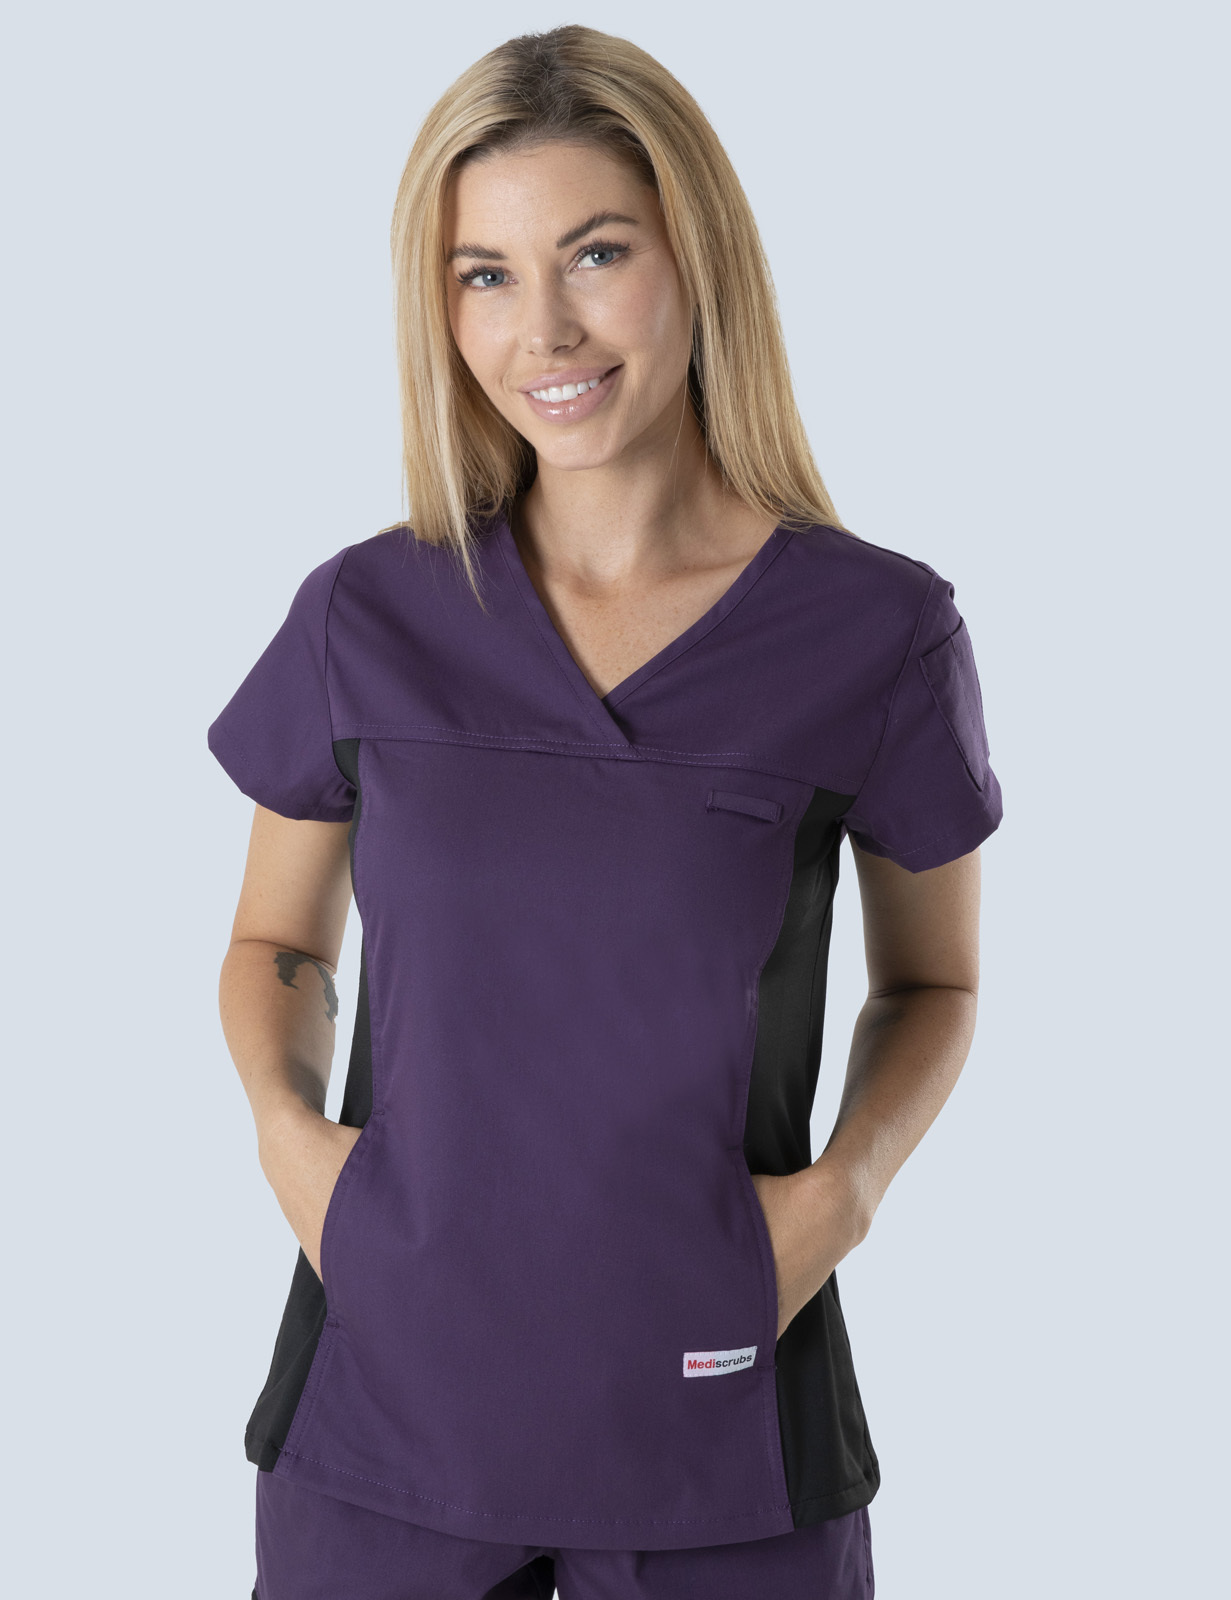 Ashmore Retreat Carer Uniform Top Only Bundle - (Women's Fit Spandex in Aubergine incl Logo) 